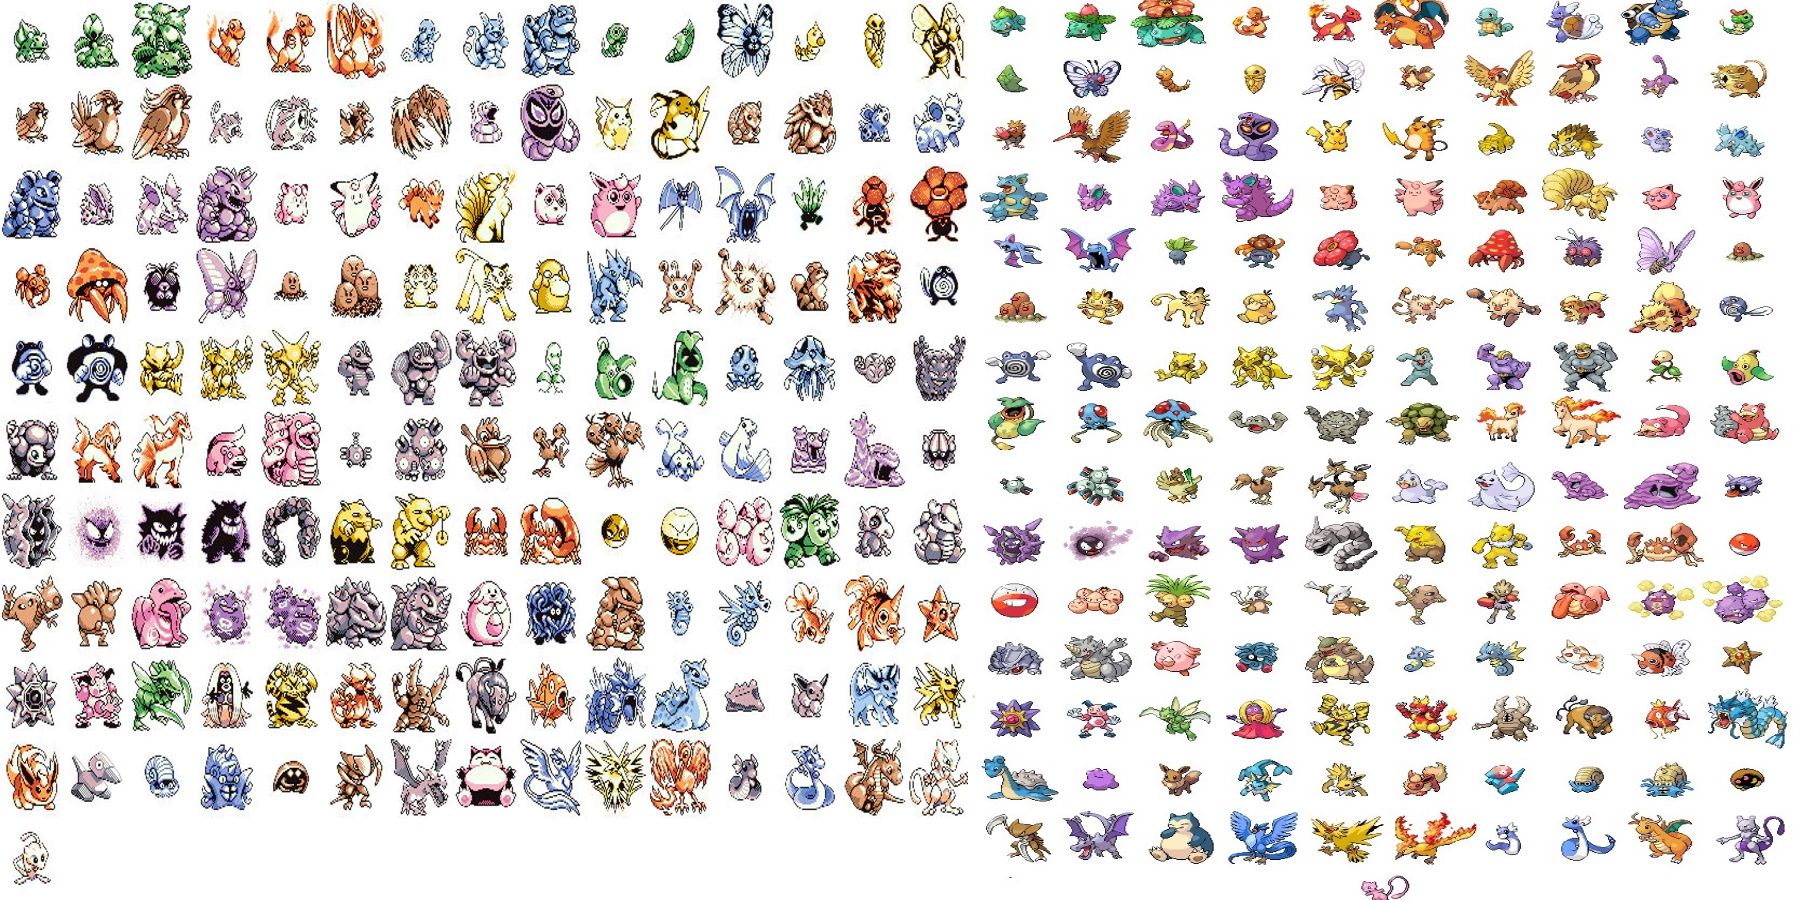 comparison between old and new gen 1 pokemon sprites